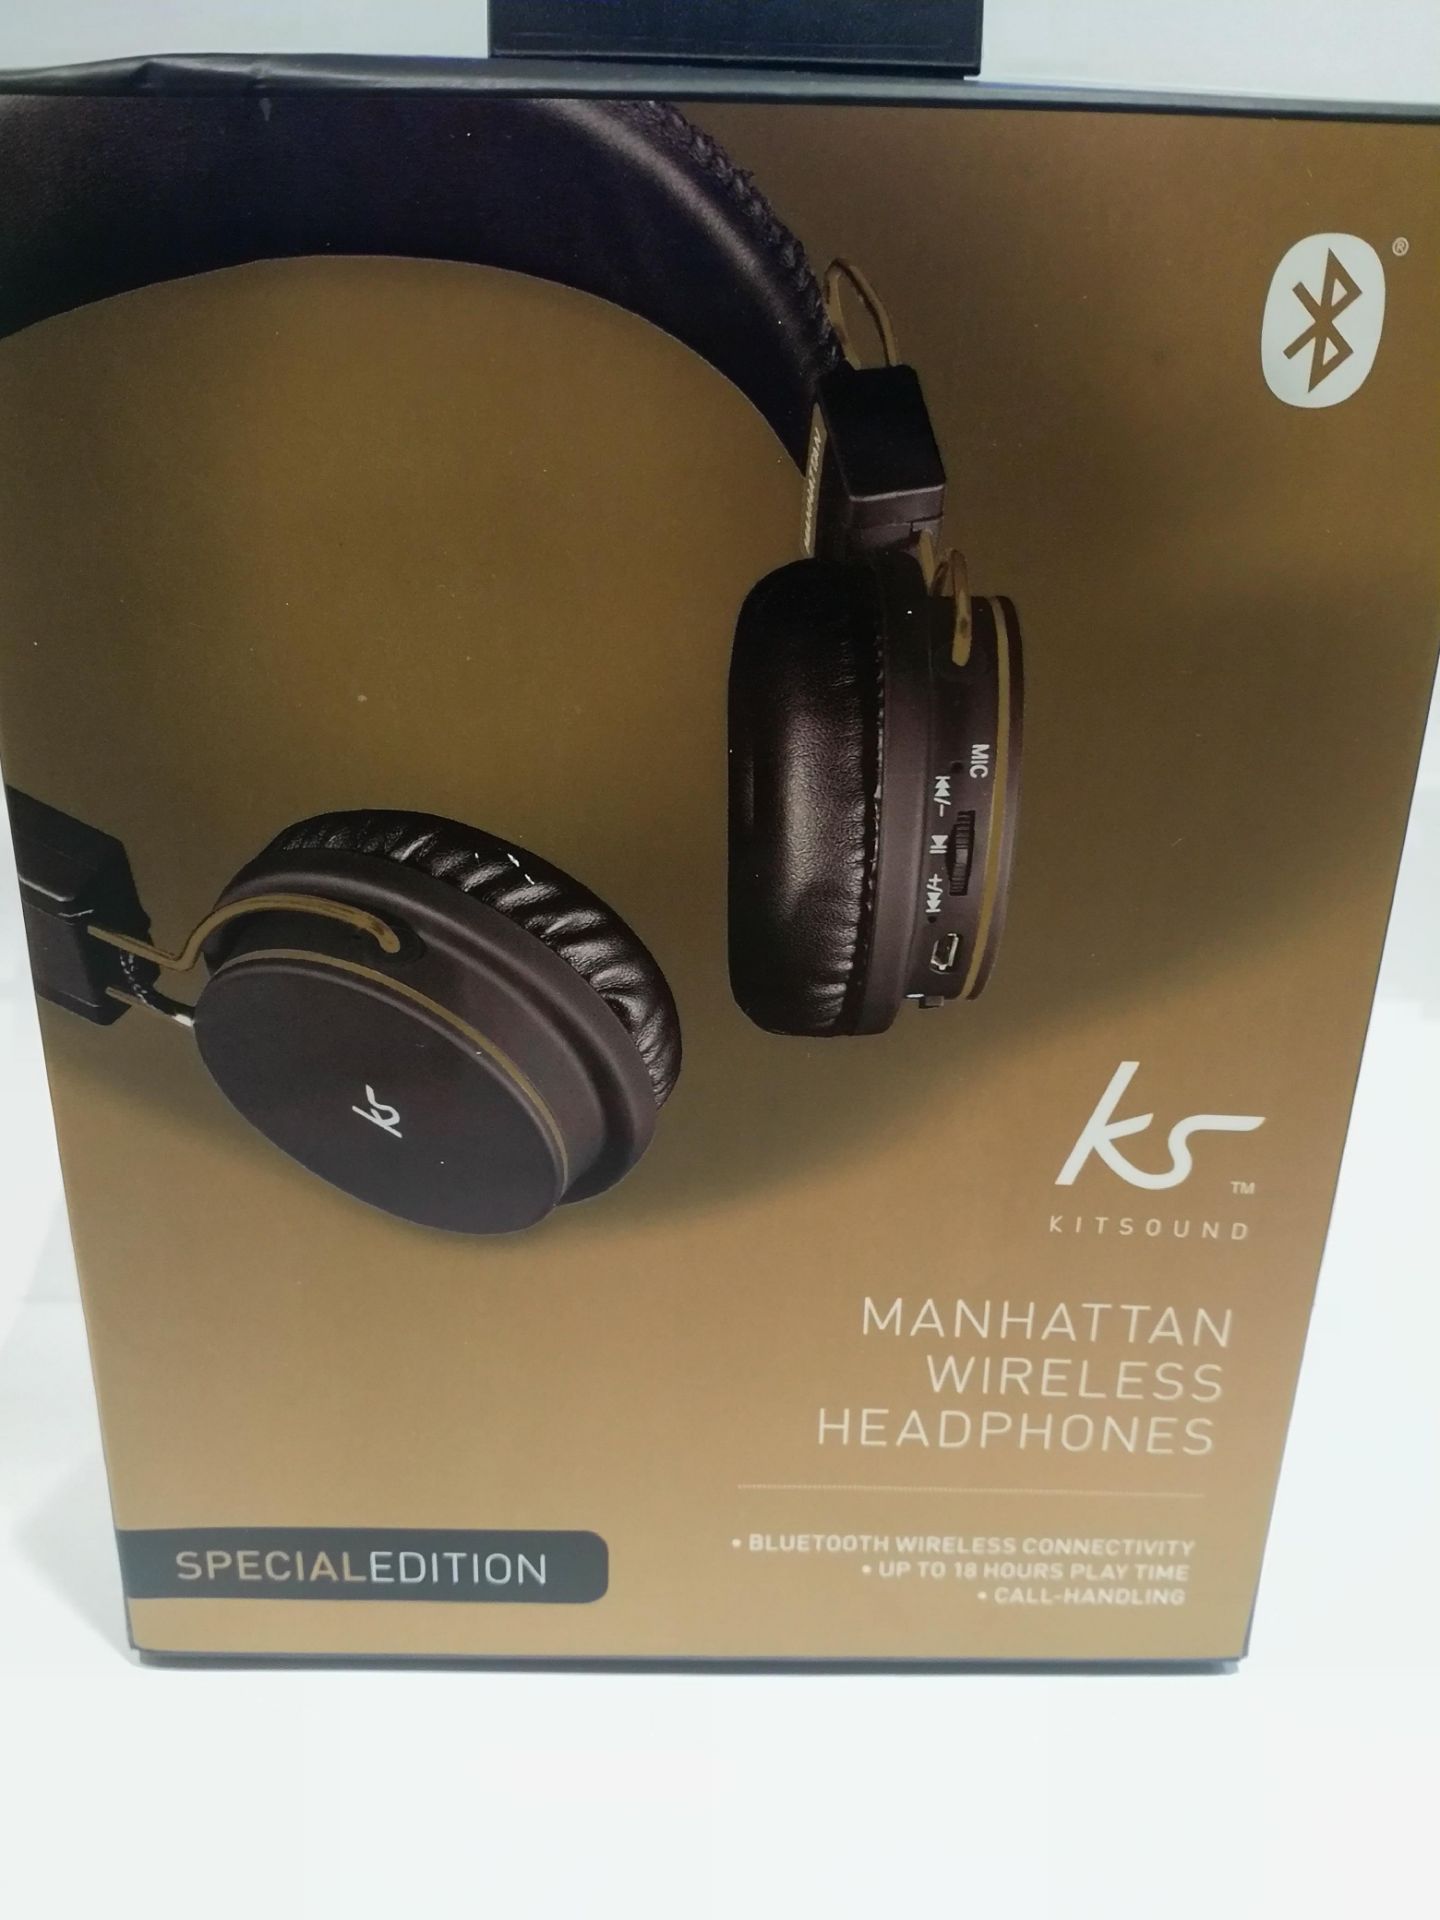 40 Kitsound Manhattan Headphones - Image 2 of 2